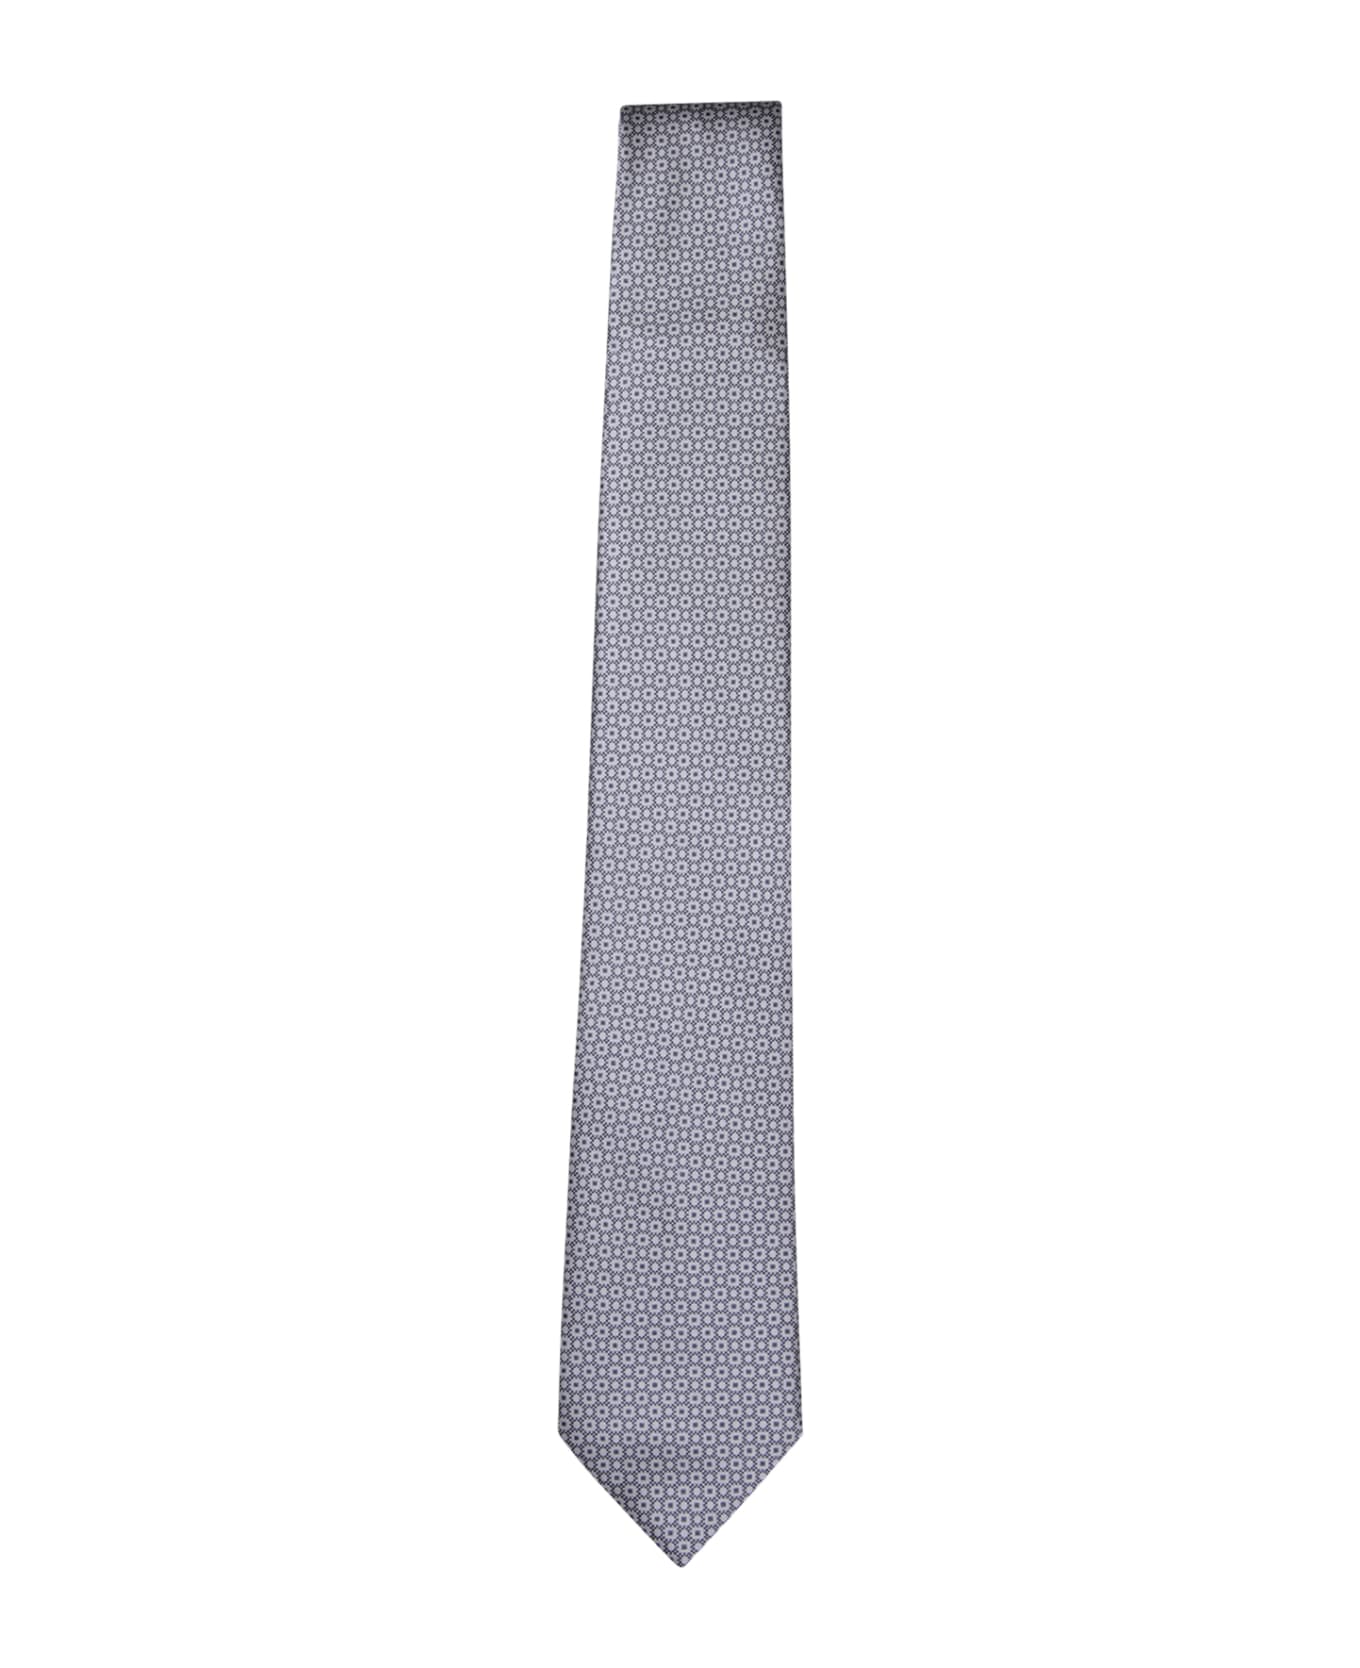 Brioni Geometric Grey/light Blue Tie - Grey